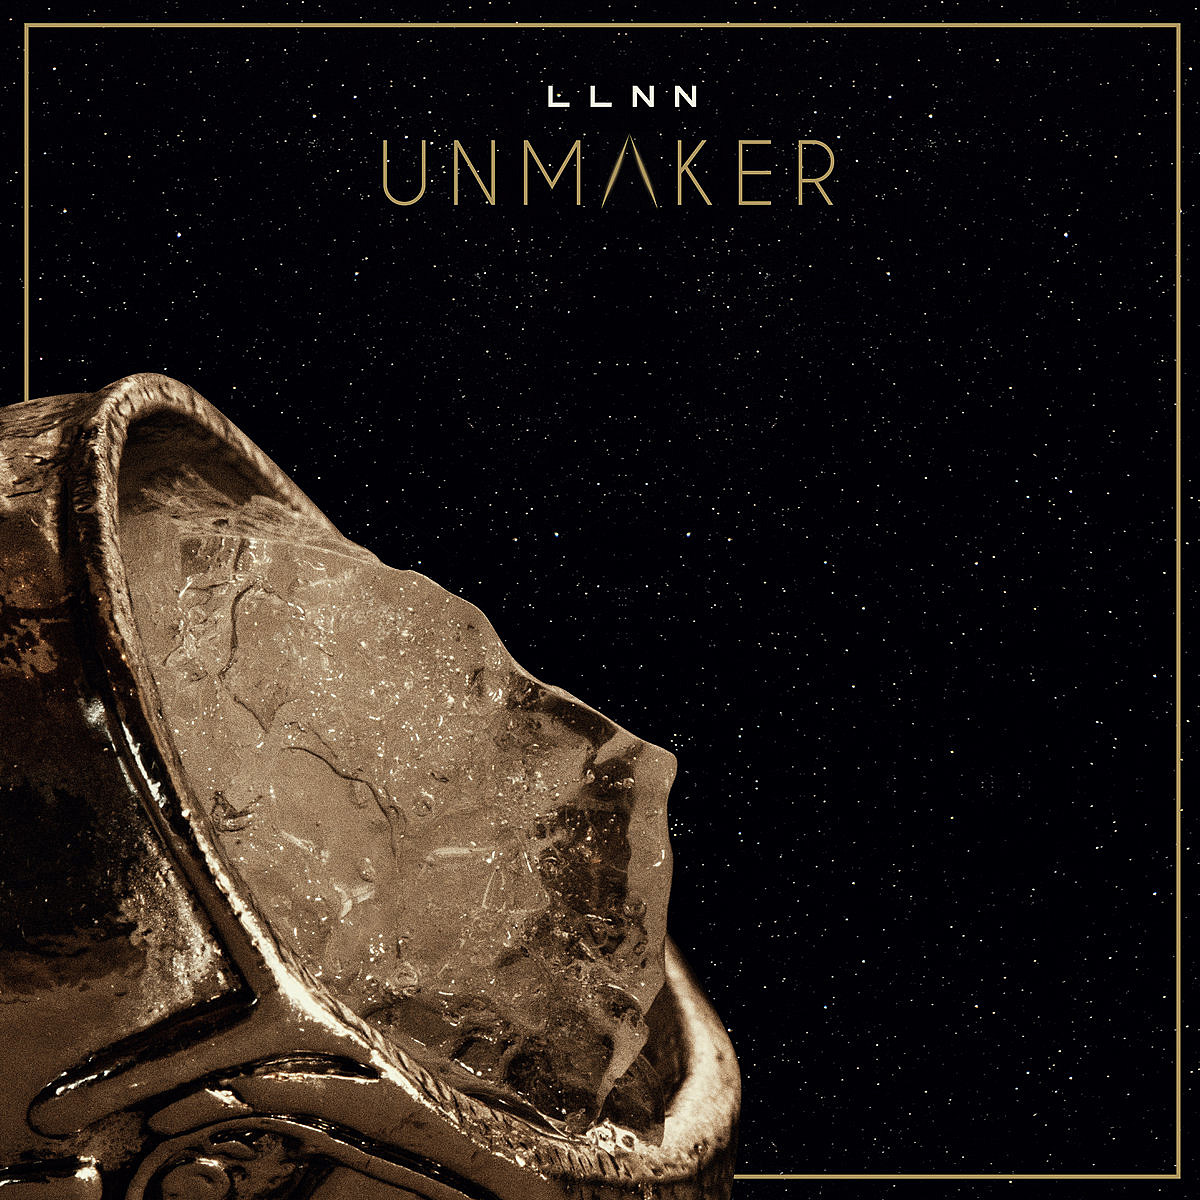 LLNN Unmaker